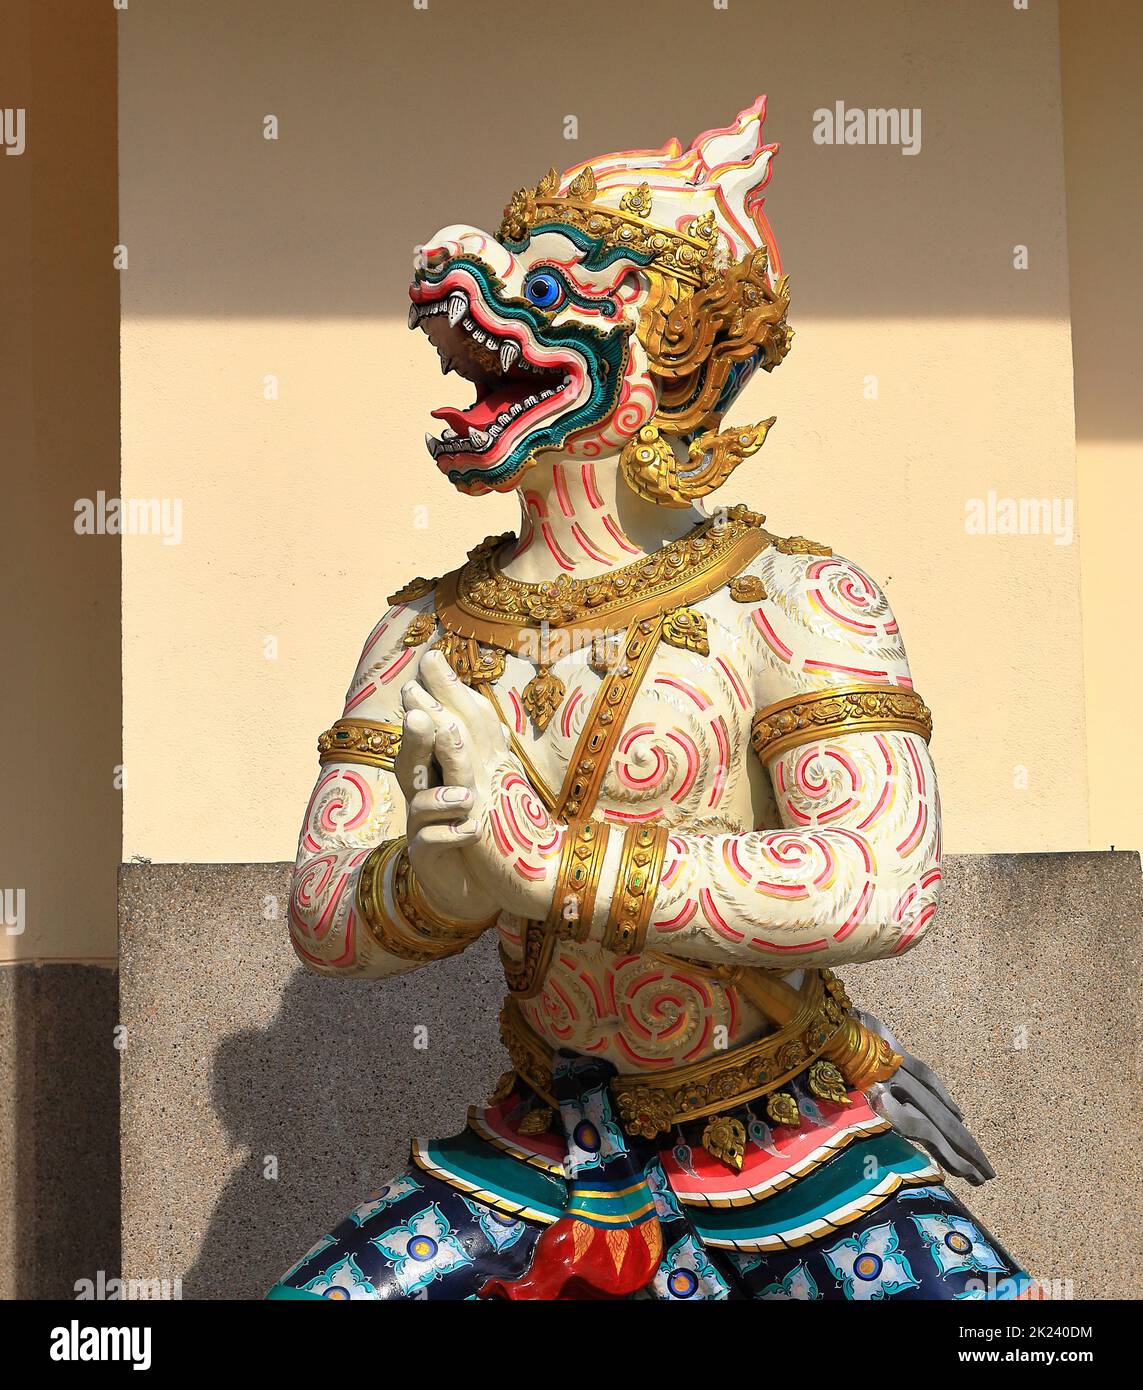 Traditional Thai figurehead, 'Hanuman' the monkey leader in ramayana story. Stock Photo